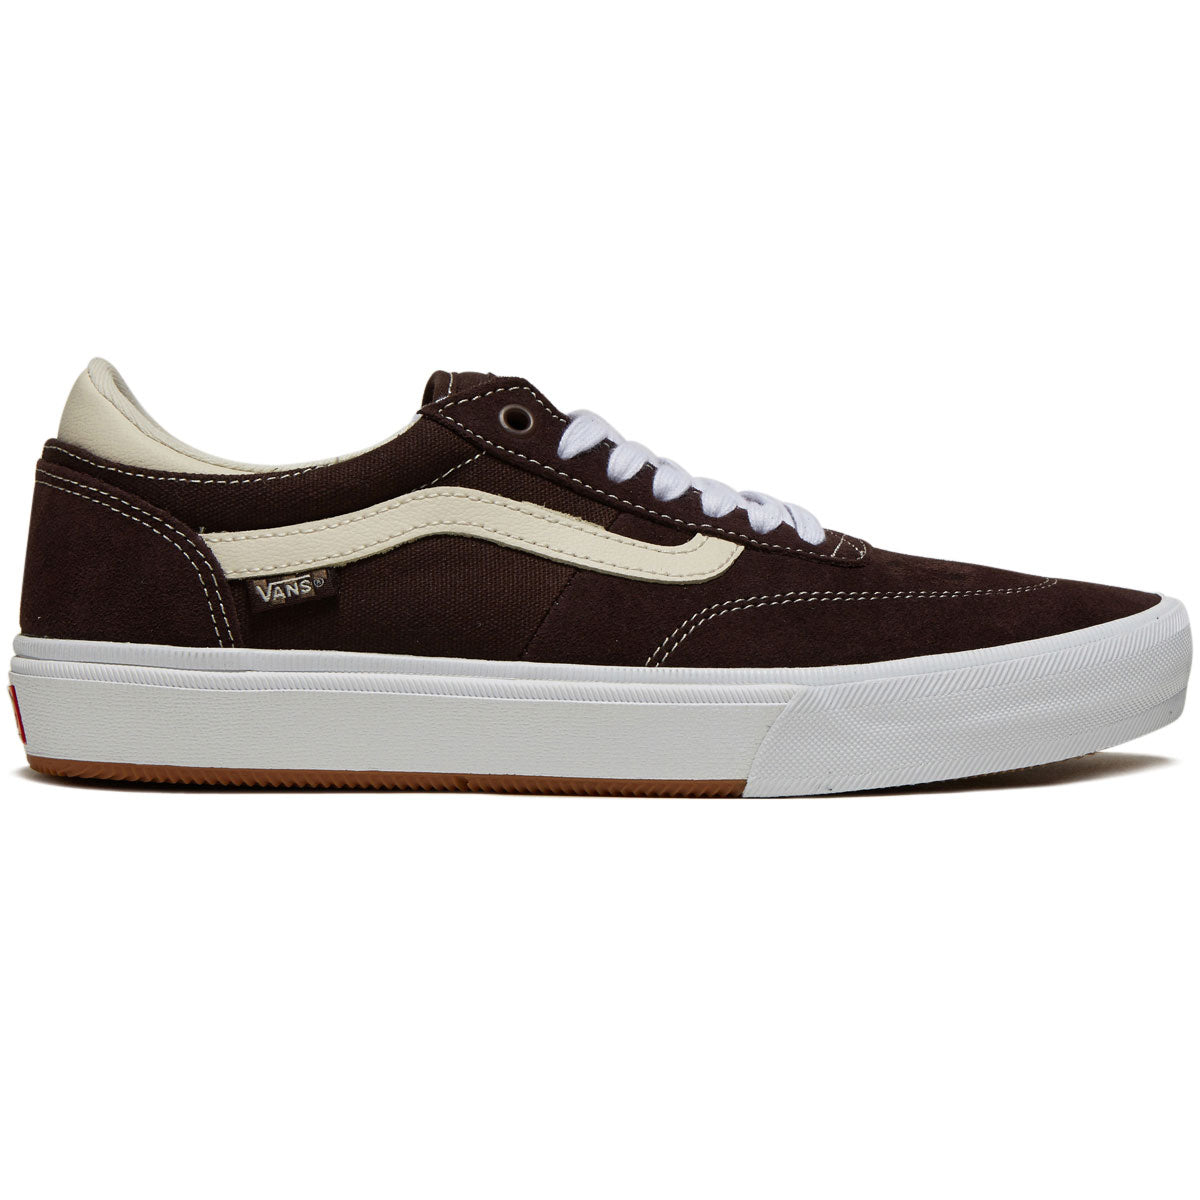 Vans Gilbert Crockett Shoes - Dark Brown image 1